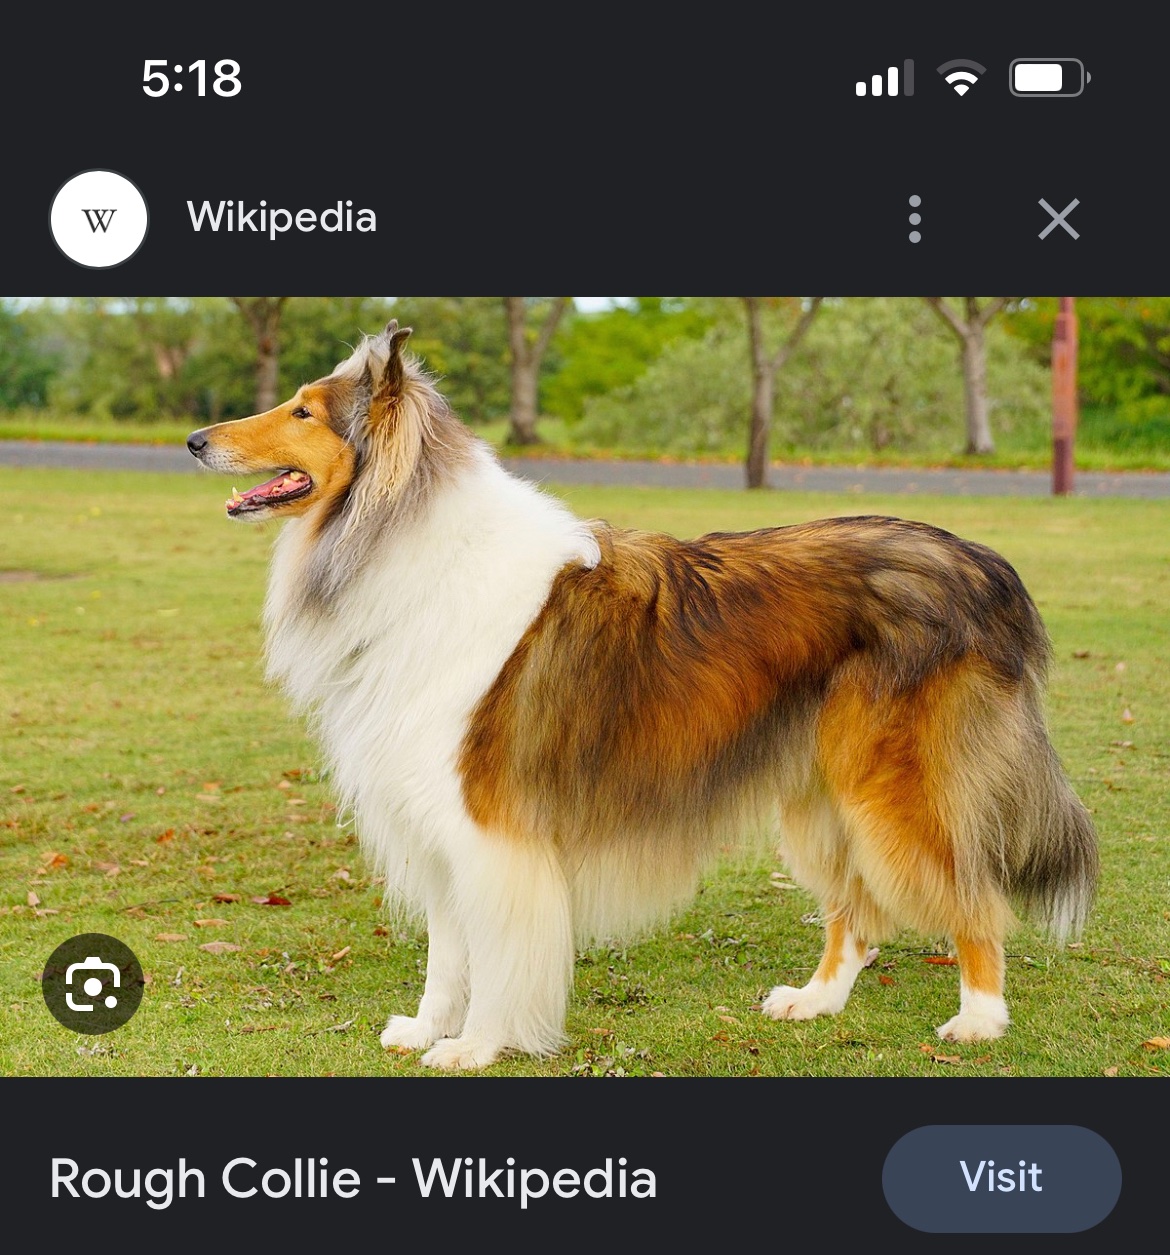 Rough Collie - Wikipedia